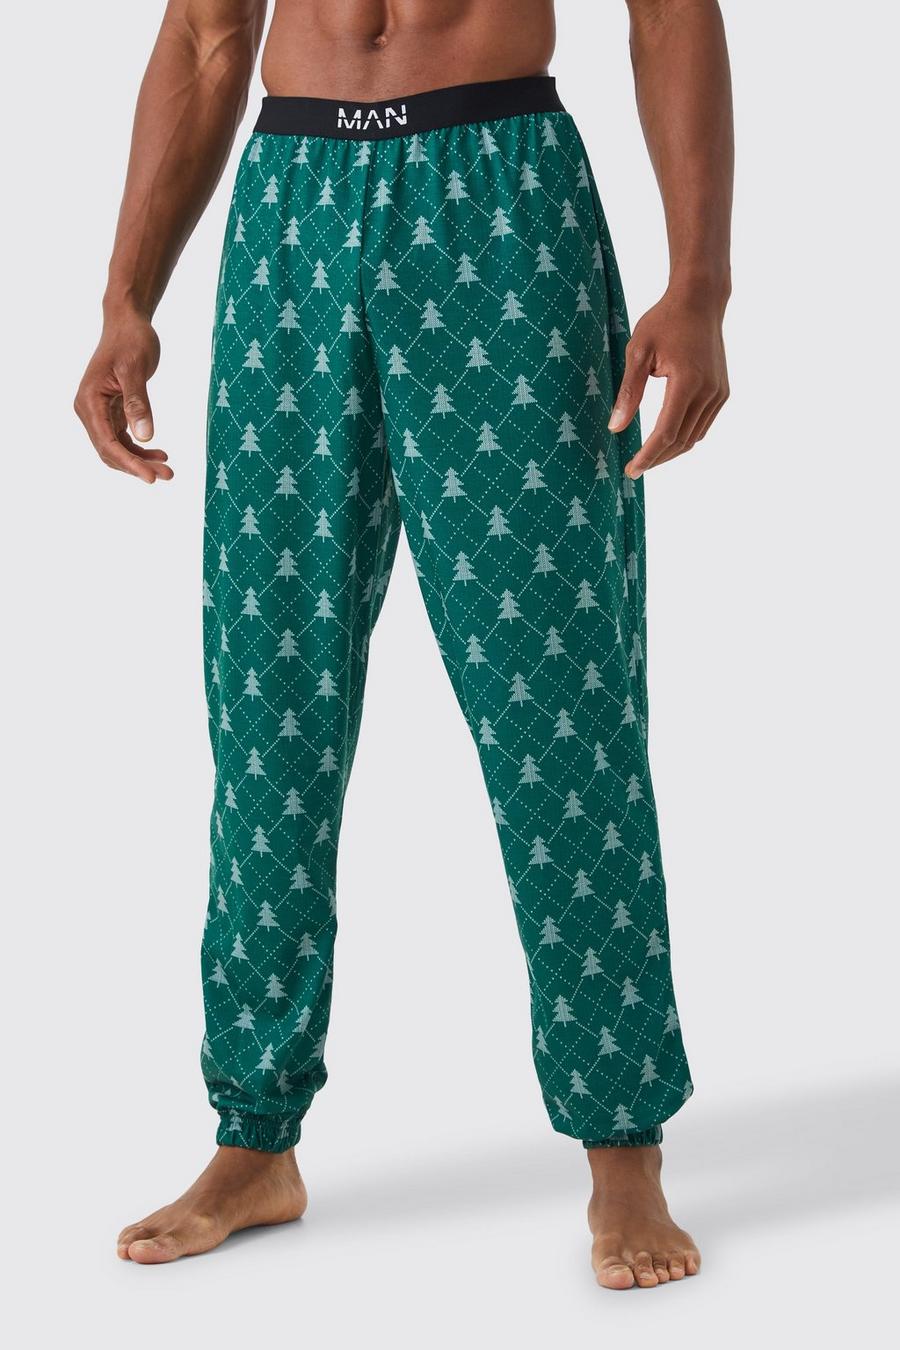 Pantalon confort à imprimé sapin de Noël, Green